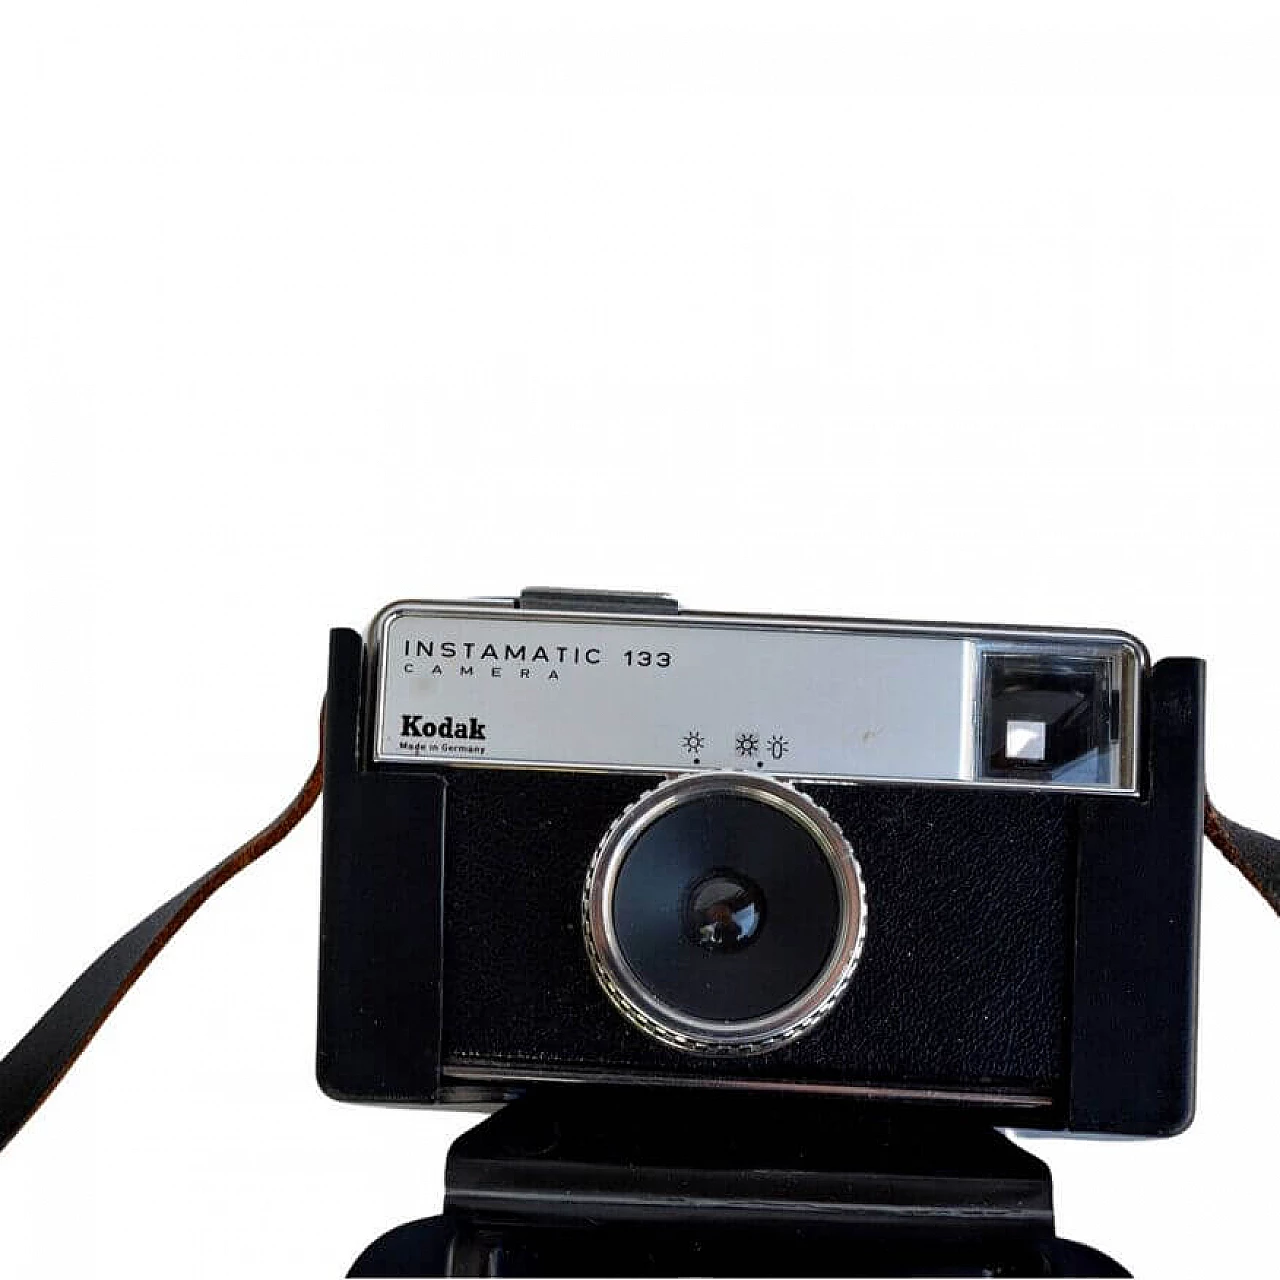 Macchina fotografica analogica Kodak Instamatic 133, anni '70 2